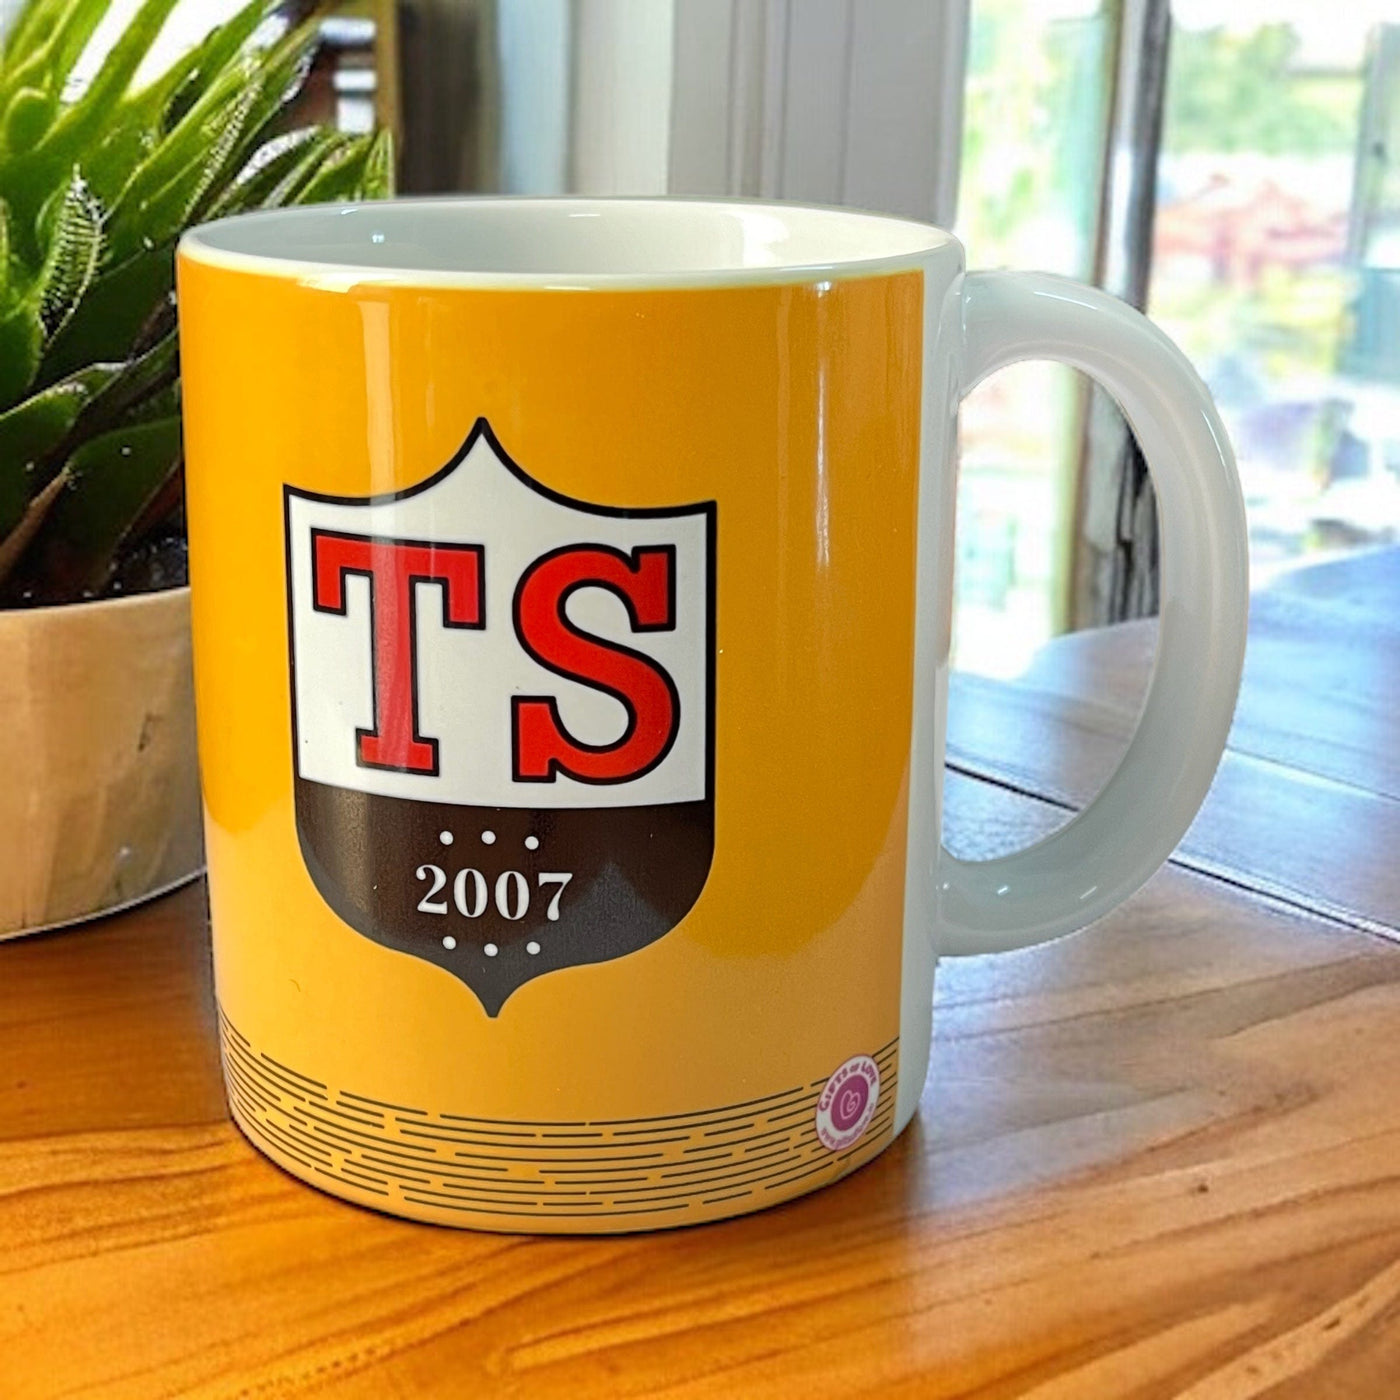 Plike Initial & Year Personalised Coffee Mug